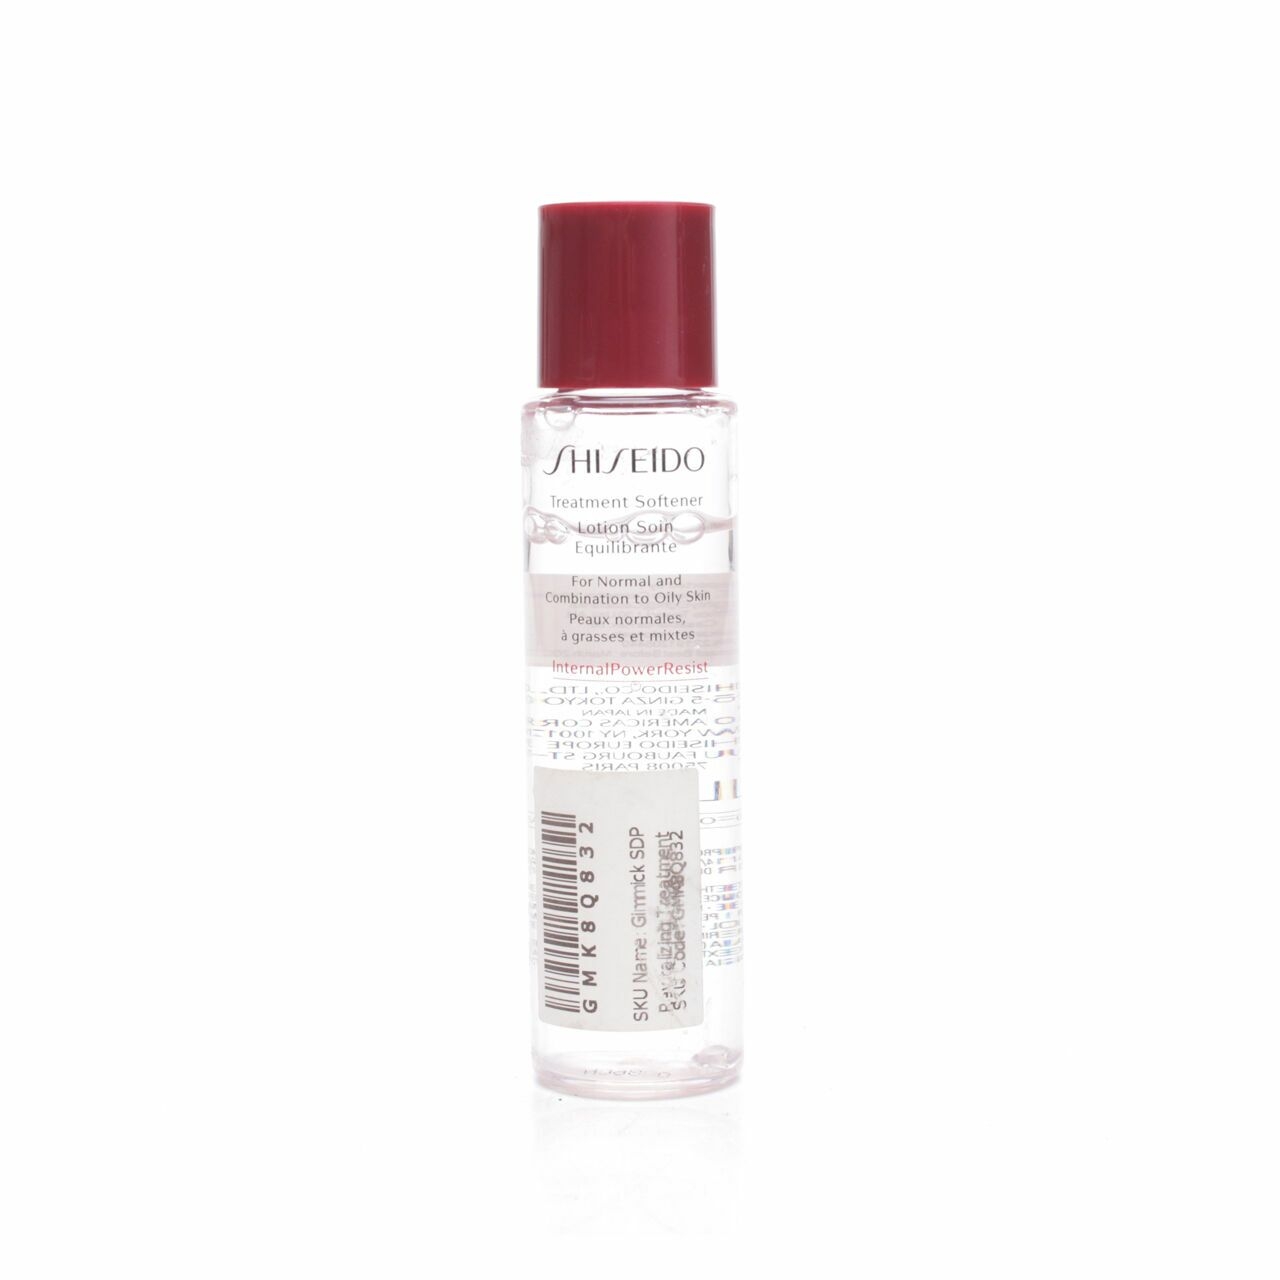 Shiseido Treatment Softener Lotion Soin Equilibrante